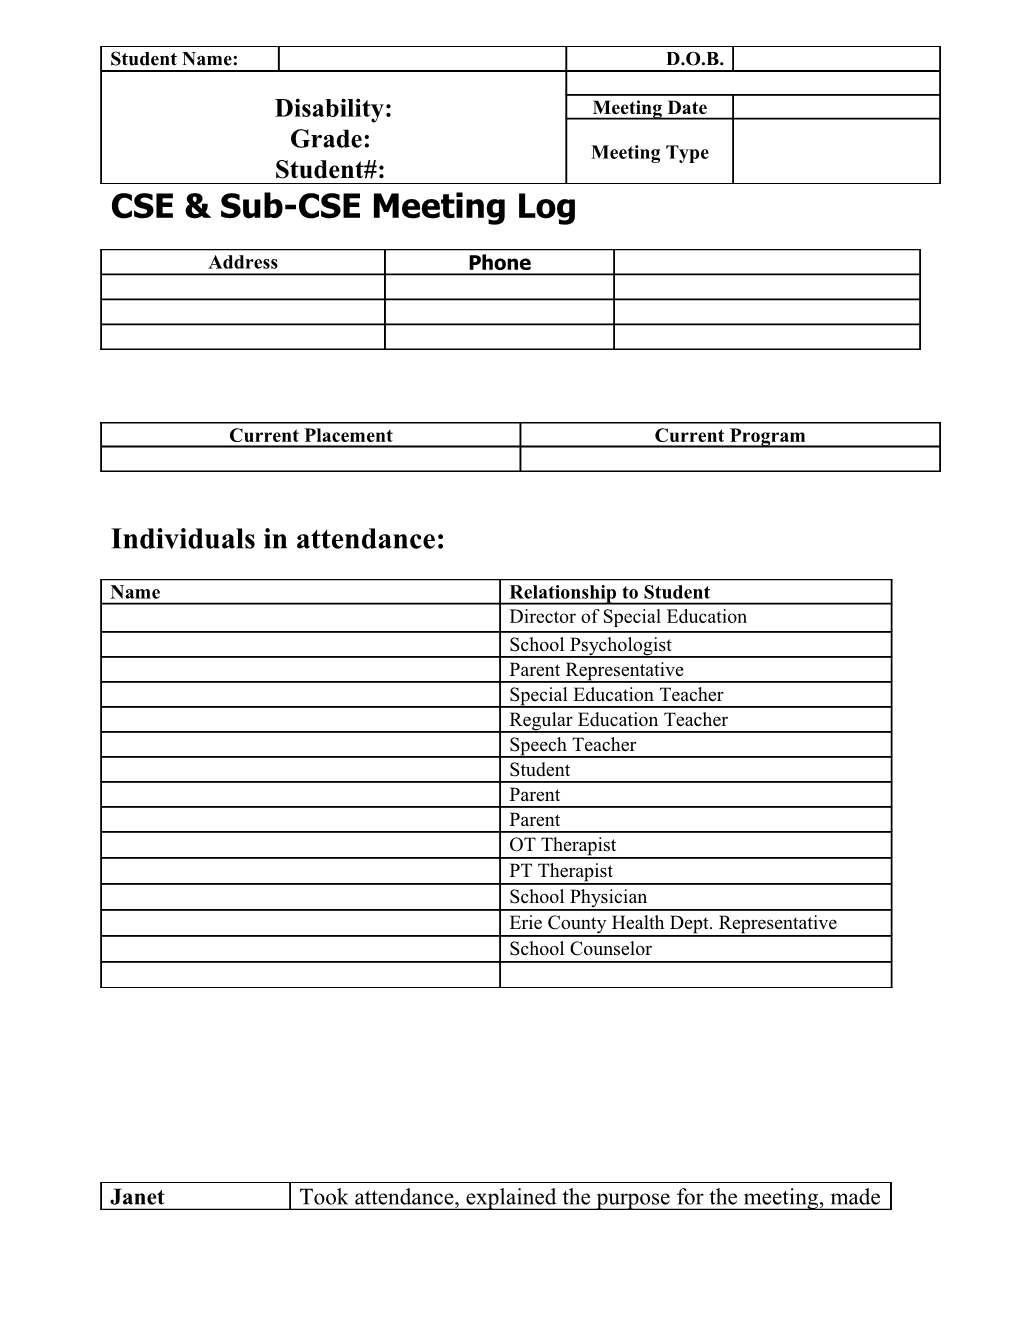 CSE & Sub-CSE Meeting Log